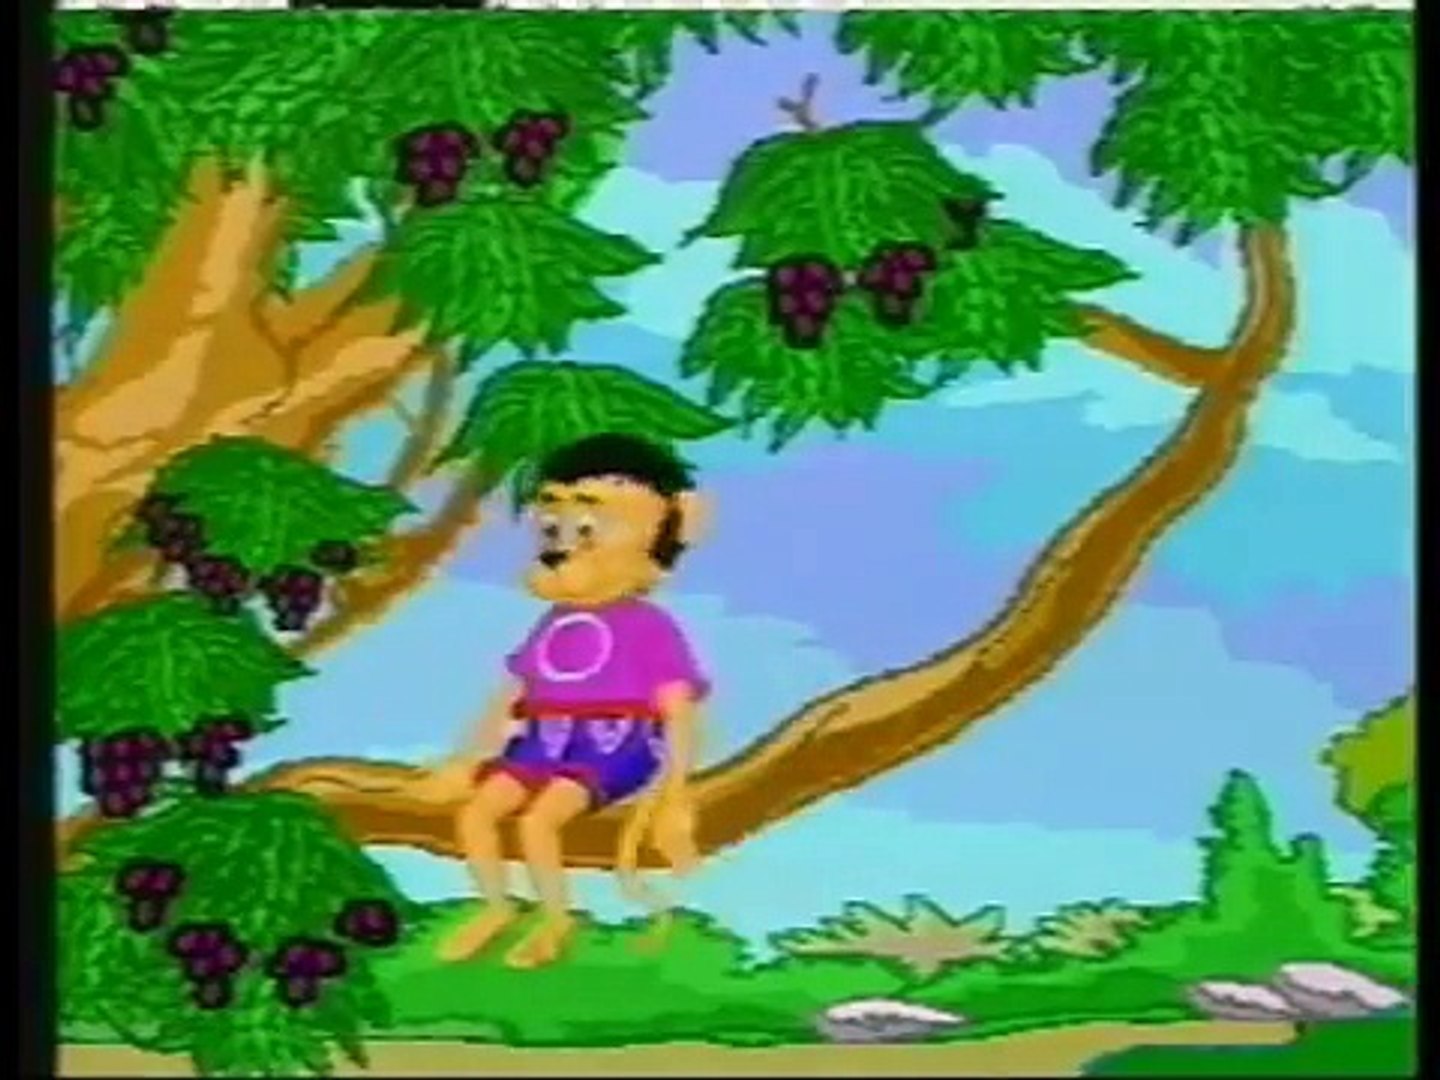 Puppet Show - Lot Pot - Episode 11 - Bunty Bandar - Kids Cartoon Tv Serial  - Hindi - Dailymotion Video